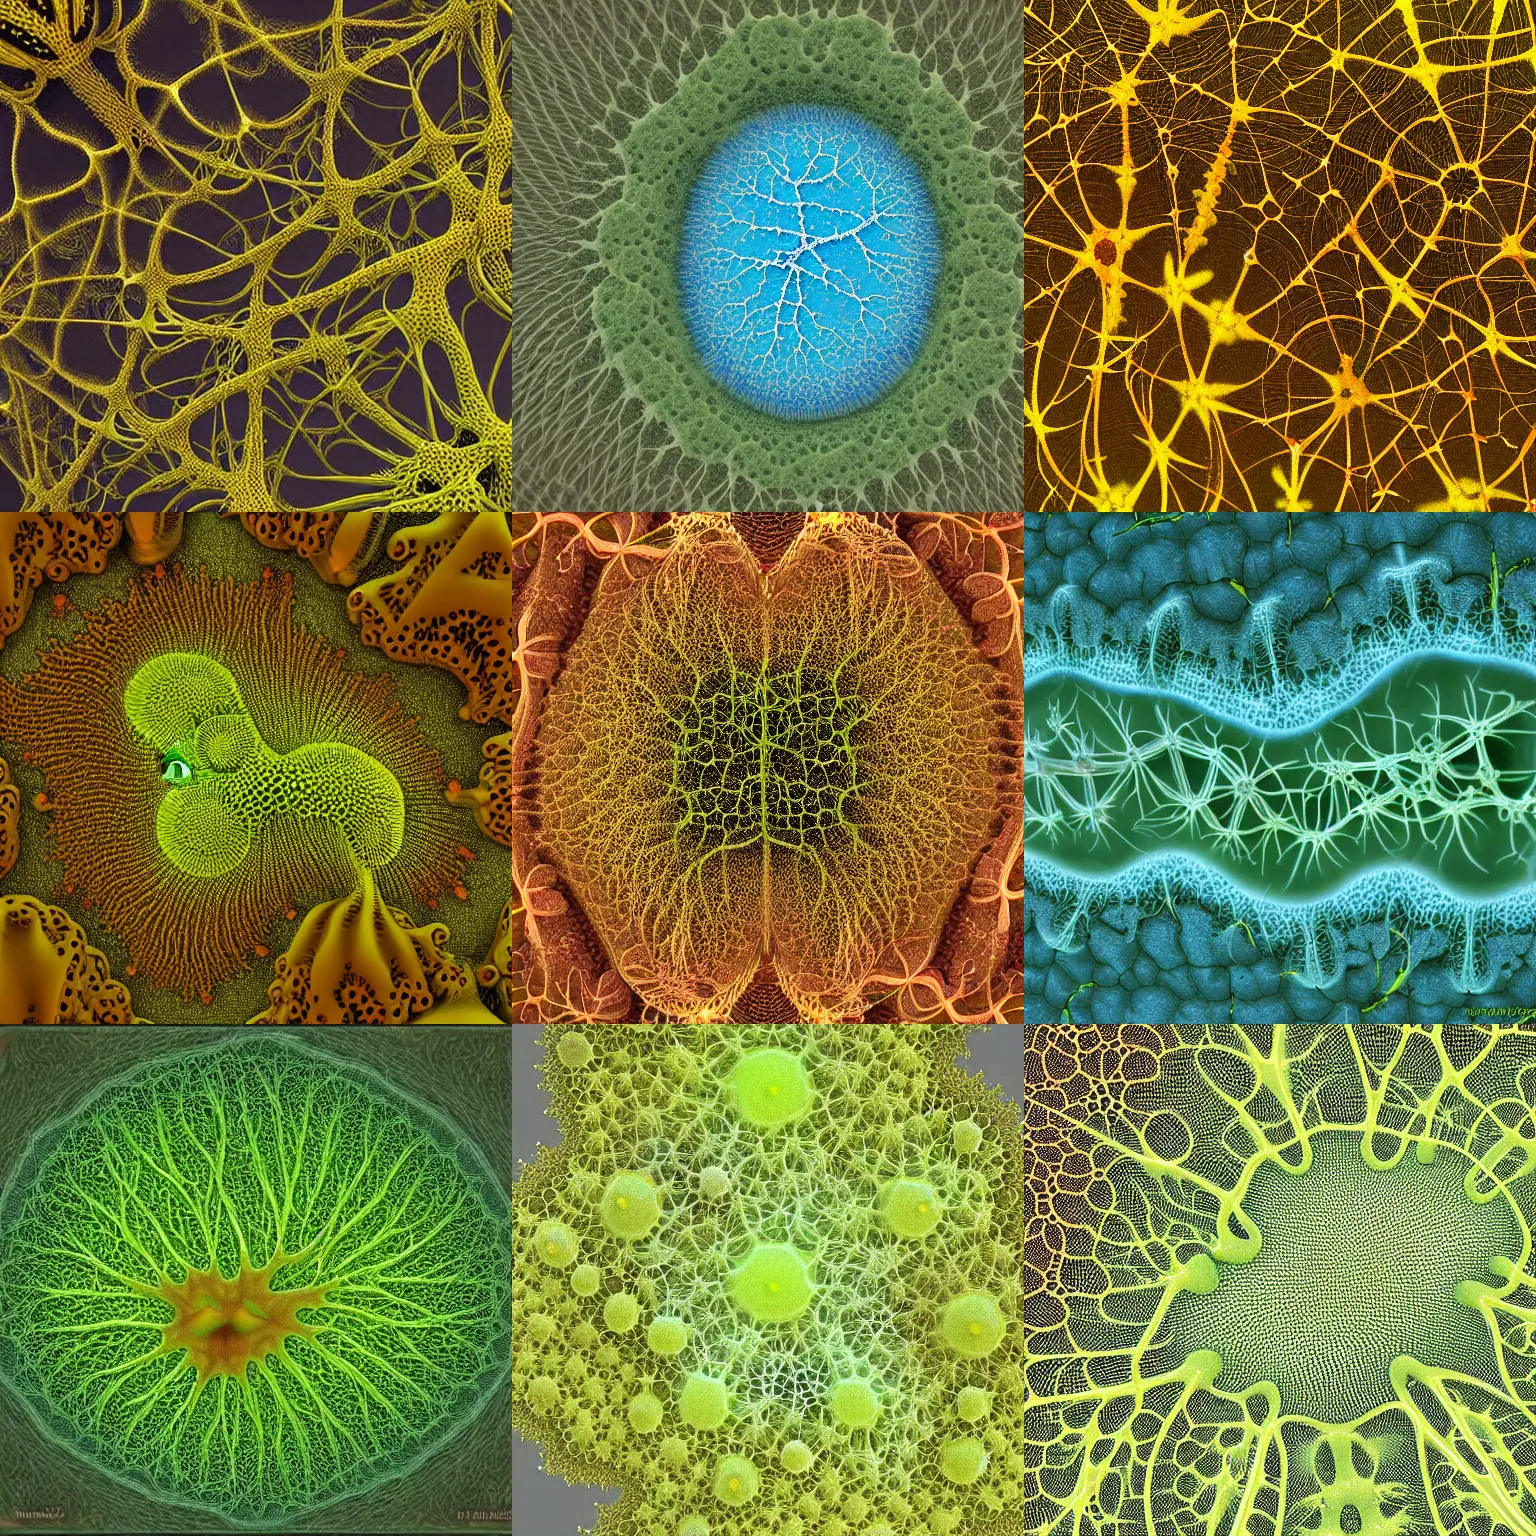 Prompt: slime mold fractal, very detailed